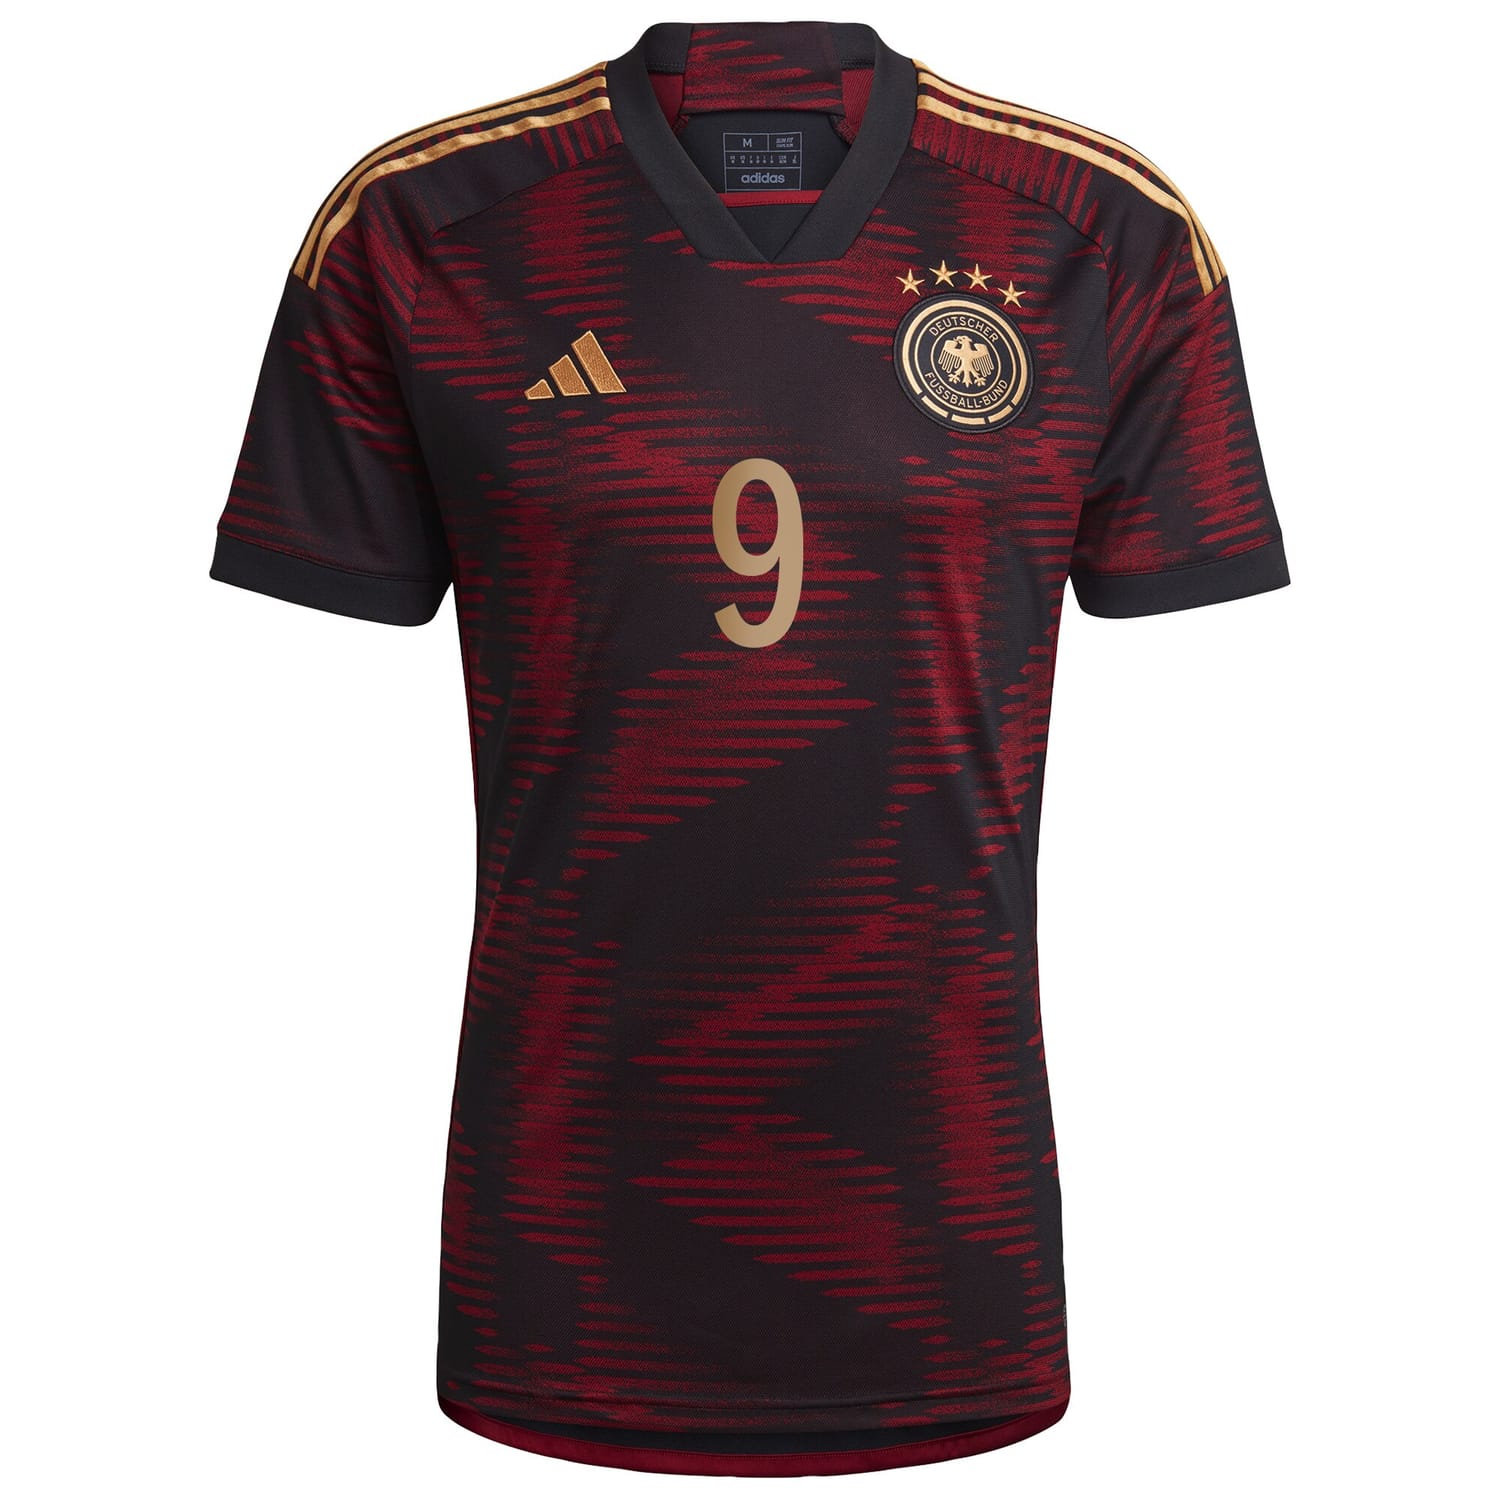 Germany National Team Away Jersey Shirt 2022 player Niclas Füllkrug 9 printing for Men